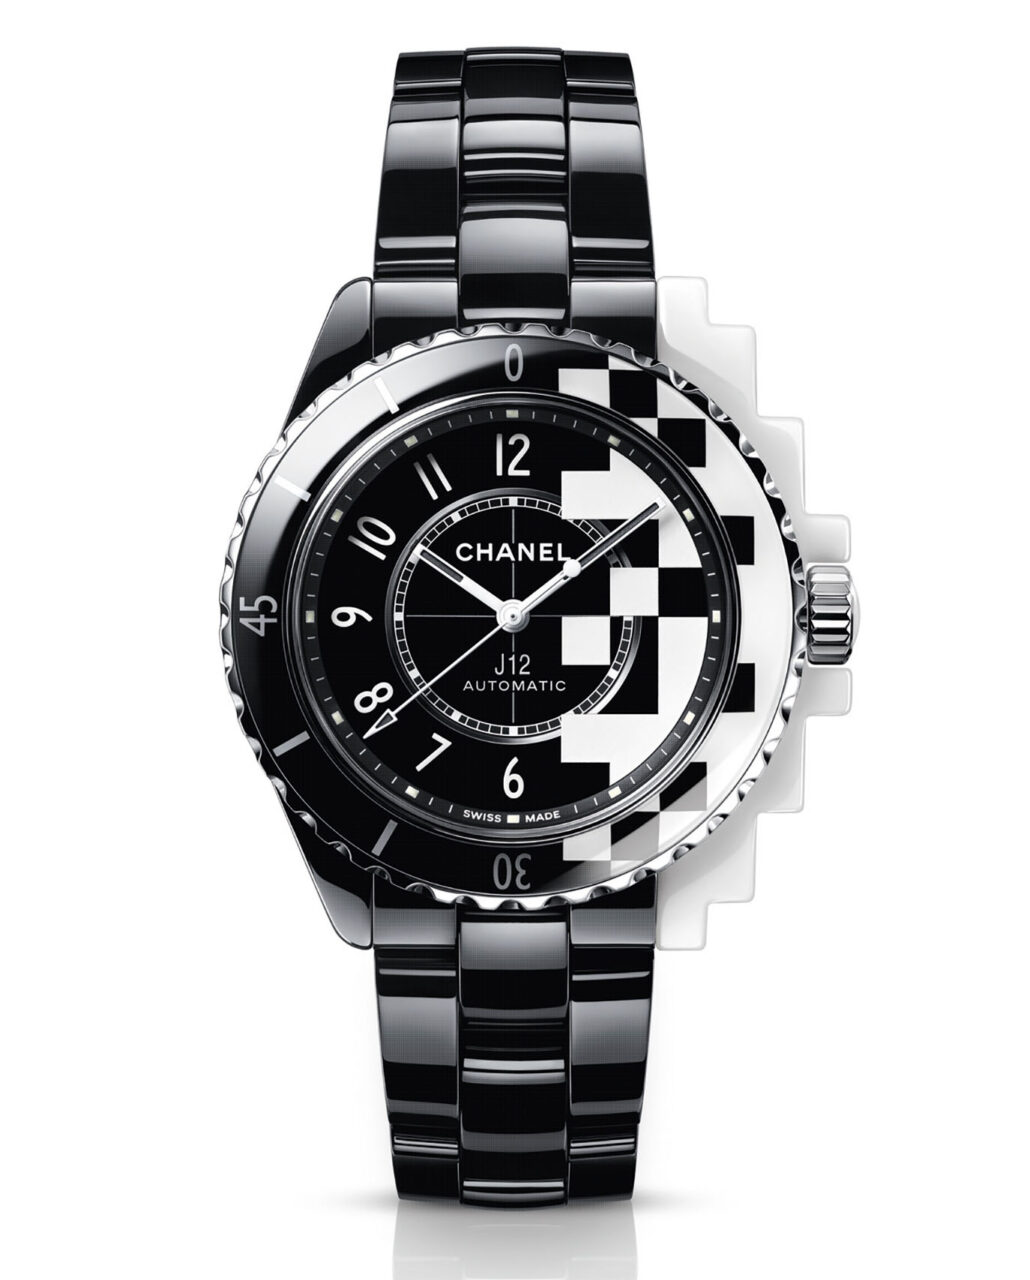 H7988_J12 CYBERNETIC watch_38mm Black and White Ceramic pixel cutting_HKD_115,100_4